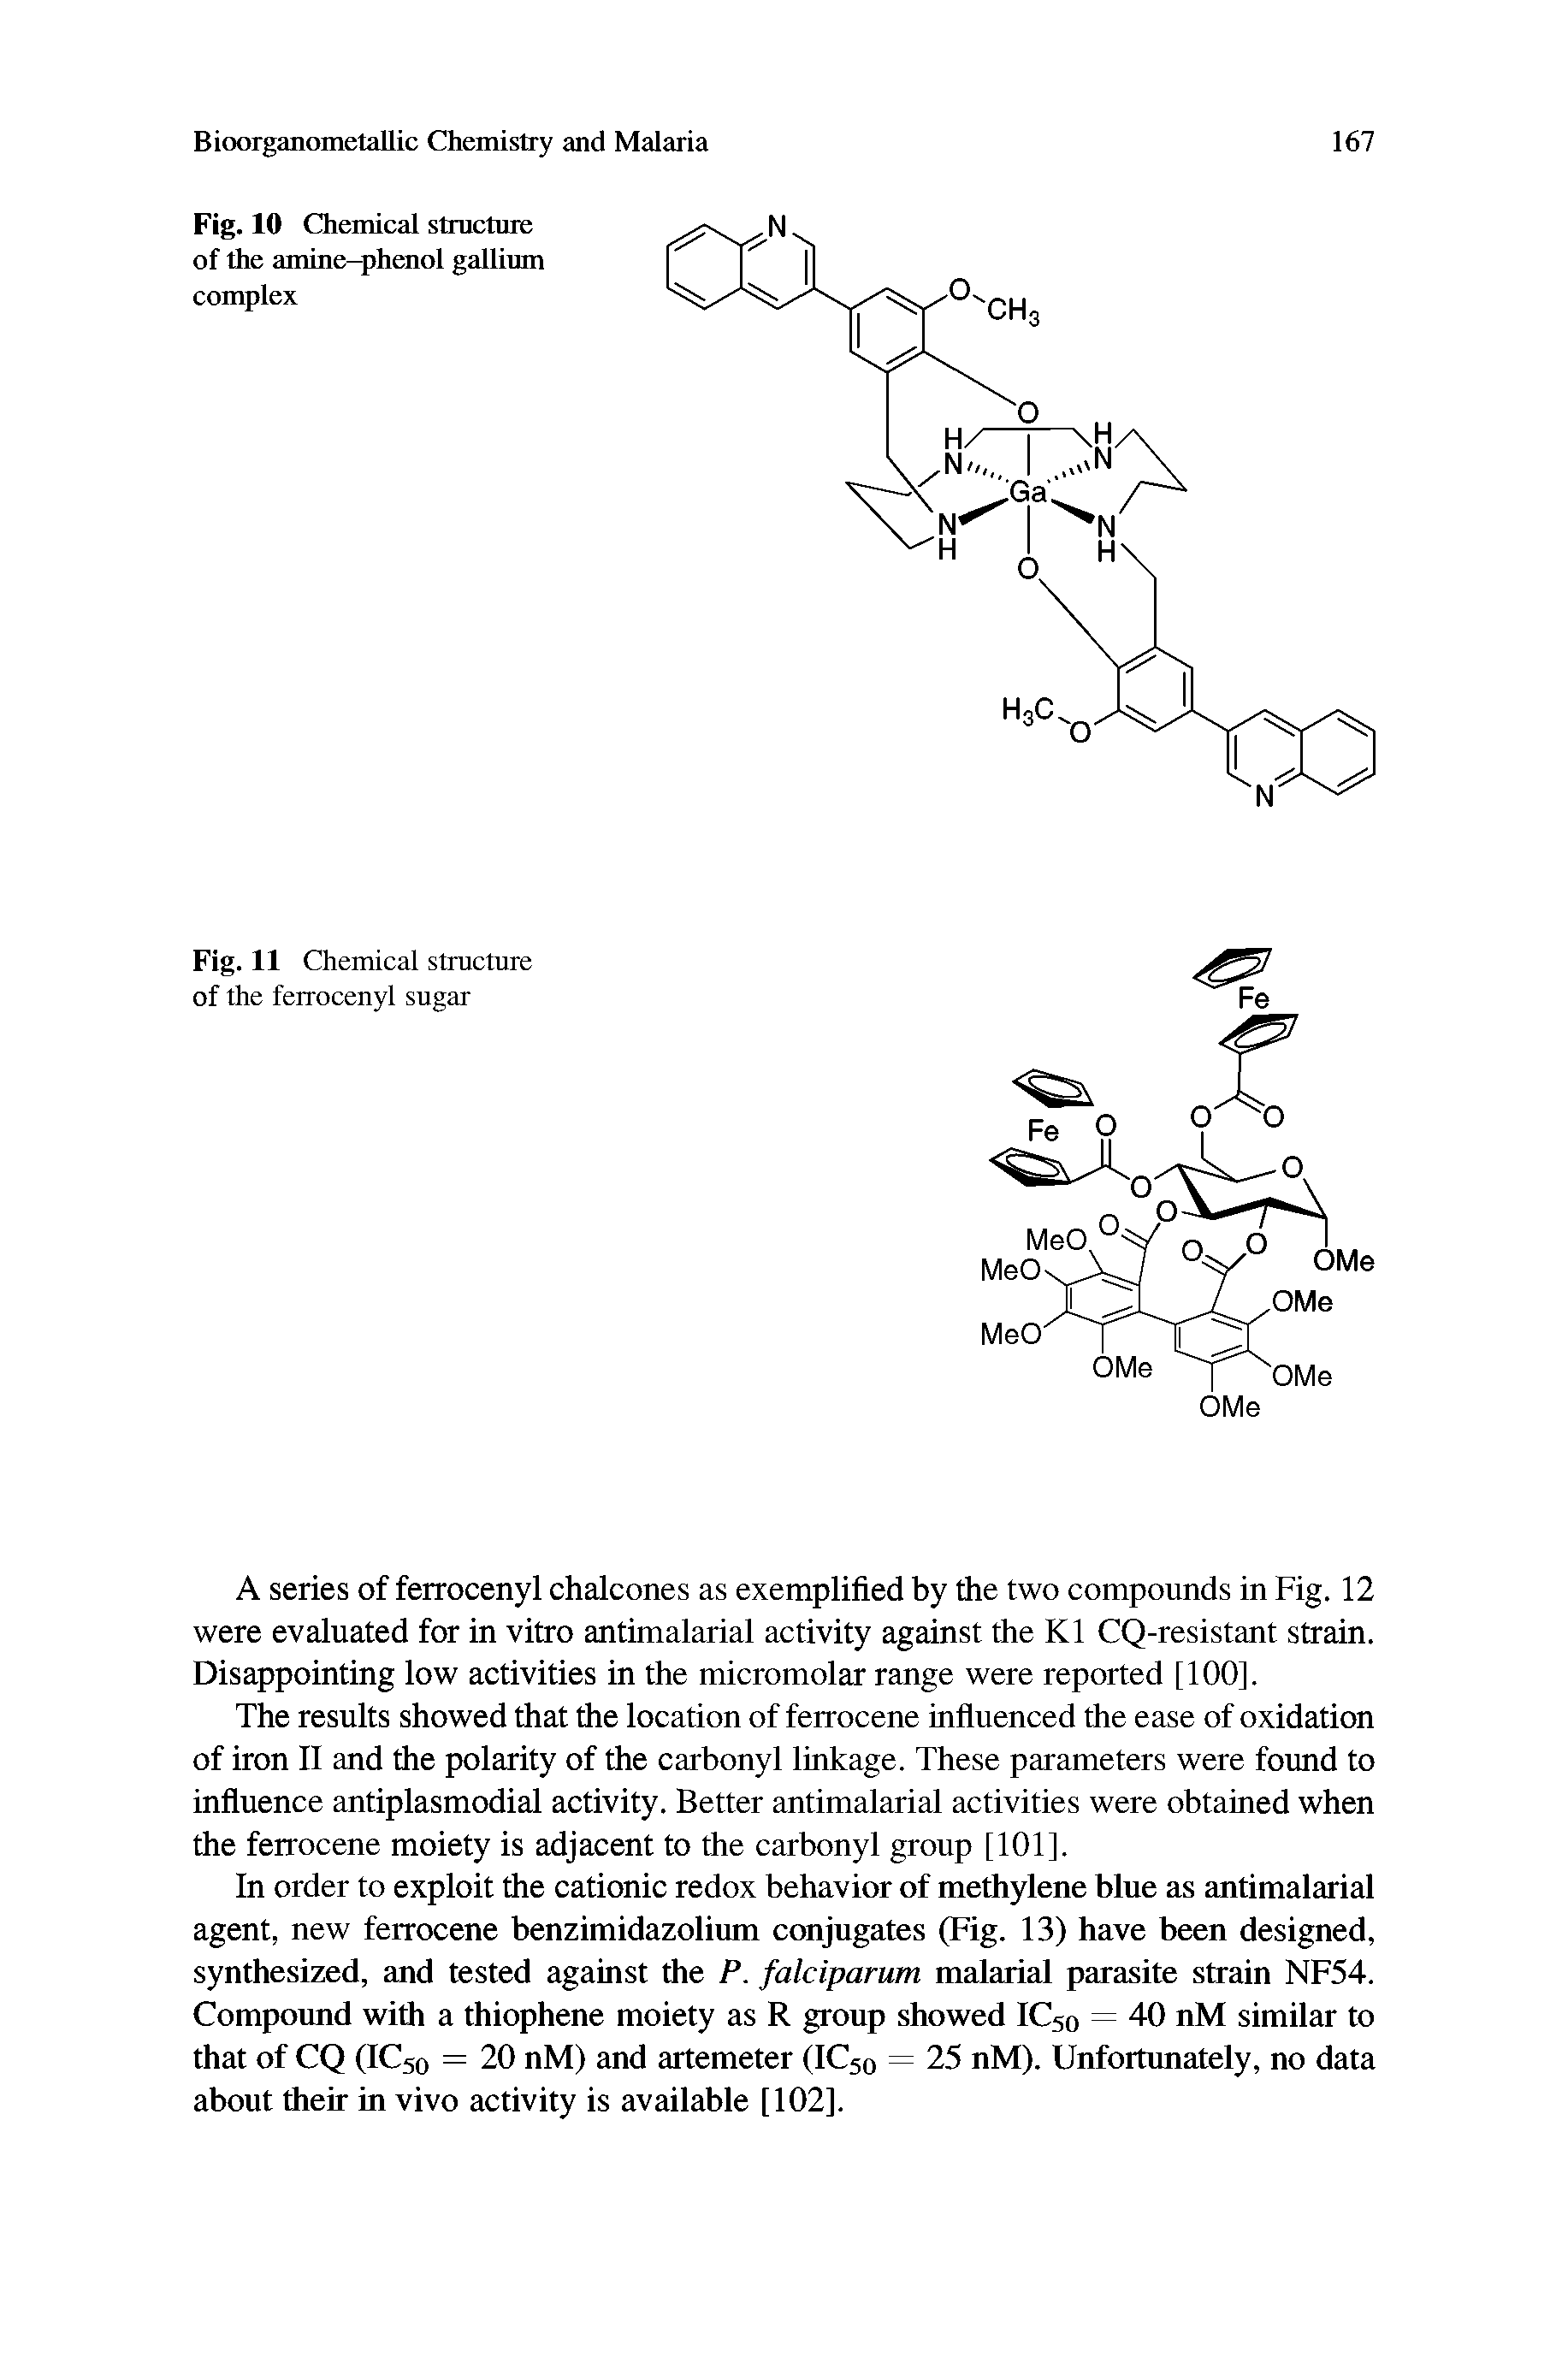 Fig. 10 Chemical structure of the amine-phenol gallium complex...